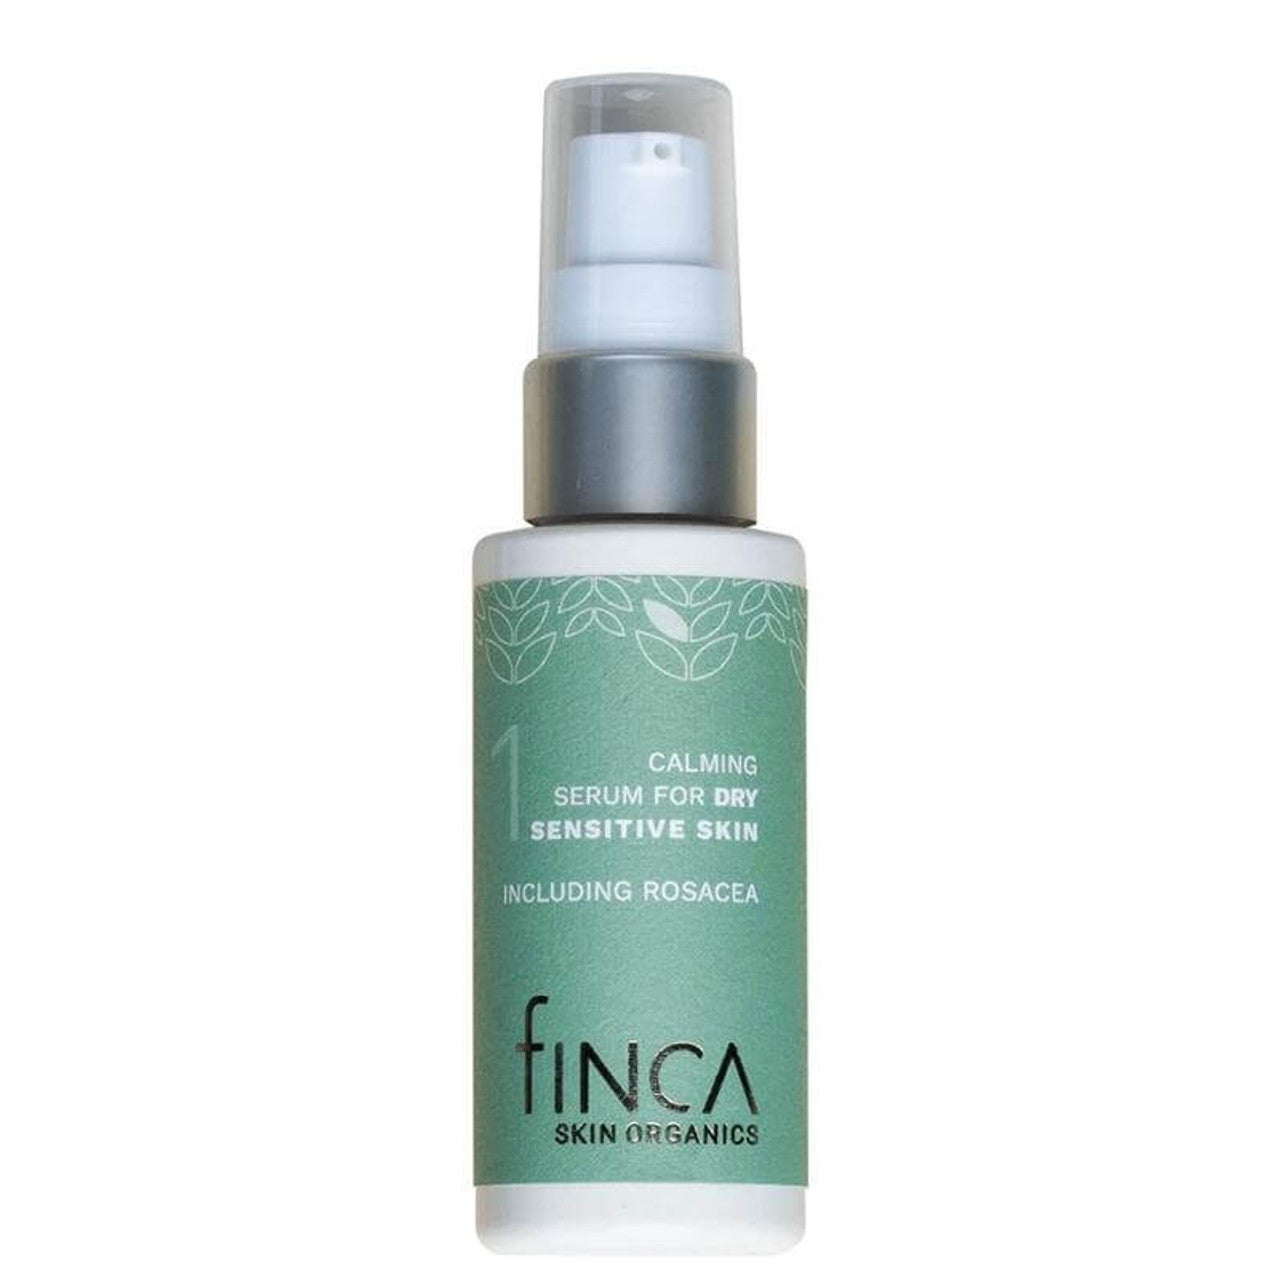 Finca Skin Organics Calming Serum